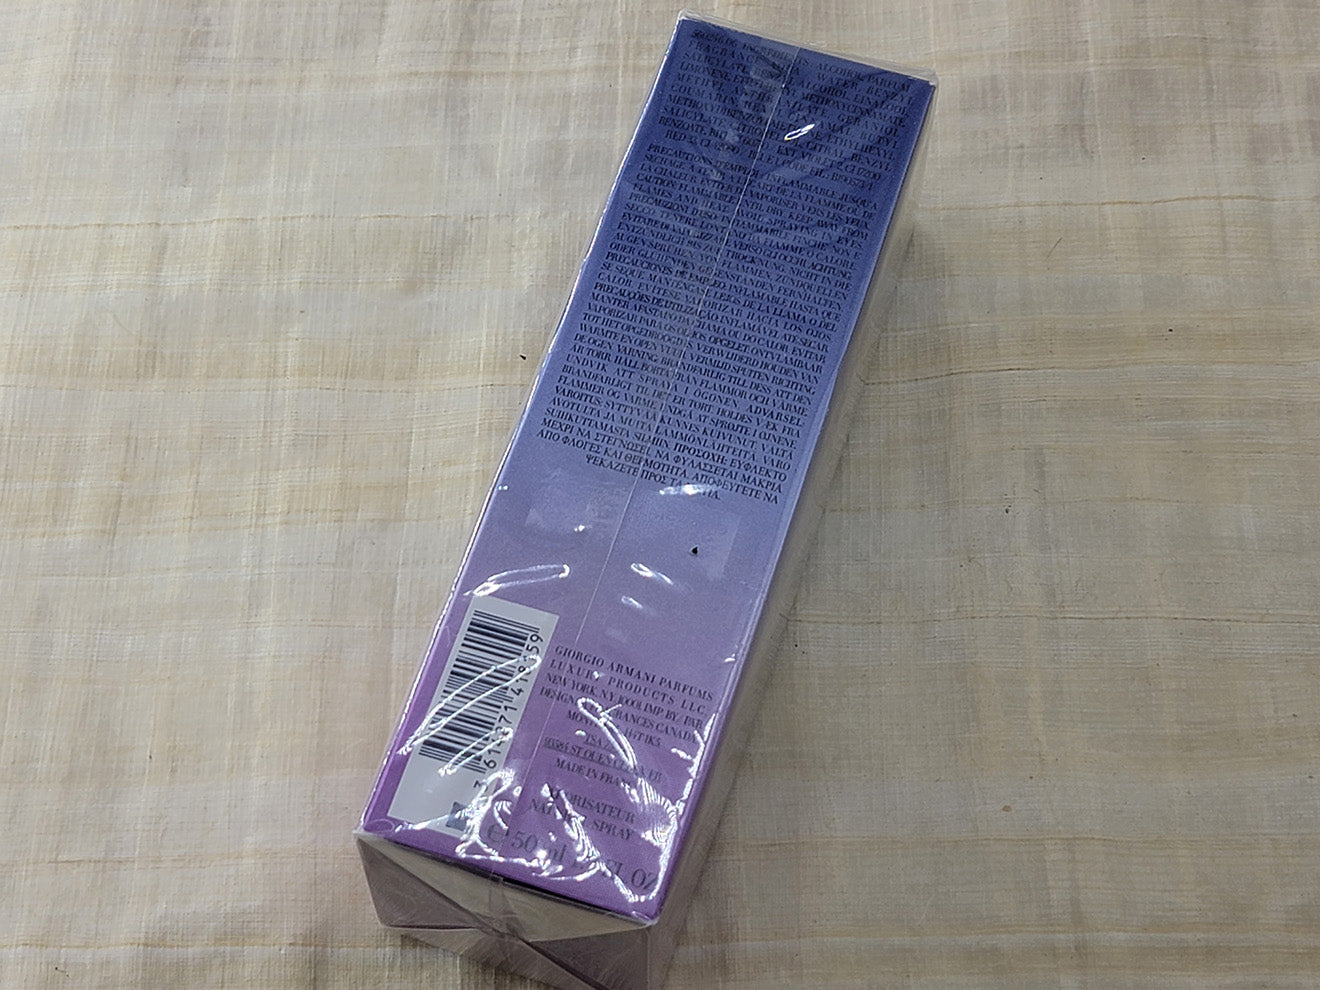 Armani Code Cashmere Giorgio Armani for women EDP Spray 50 ml 1.7 oz, Rare, Vintage, Sealed